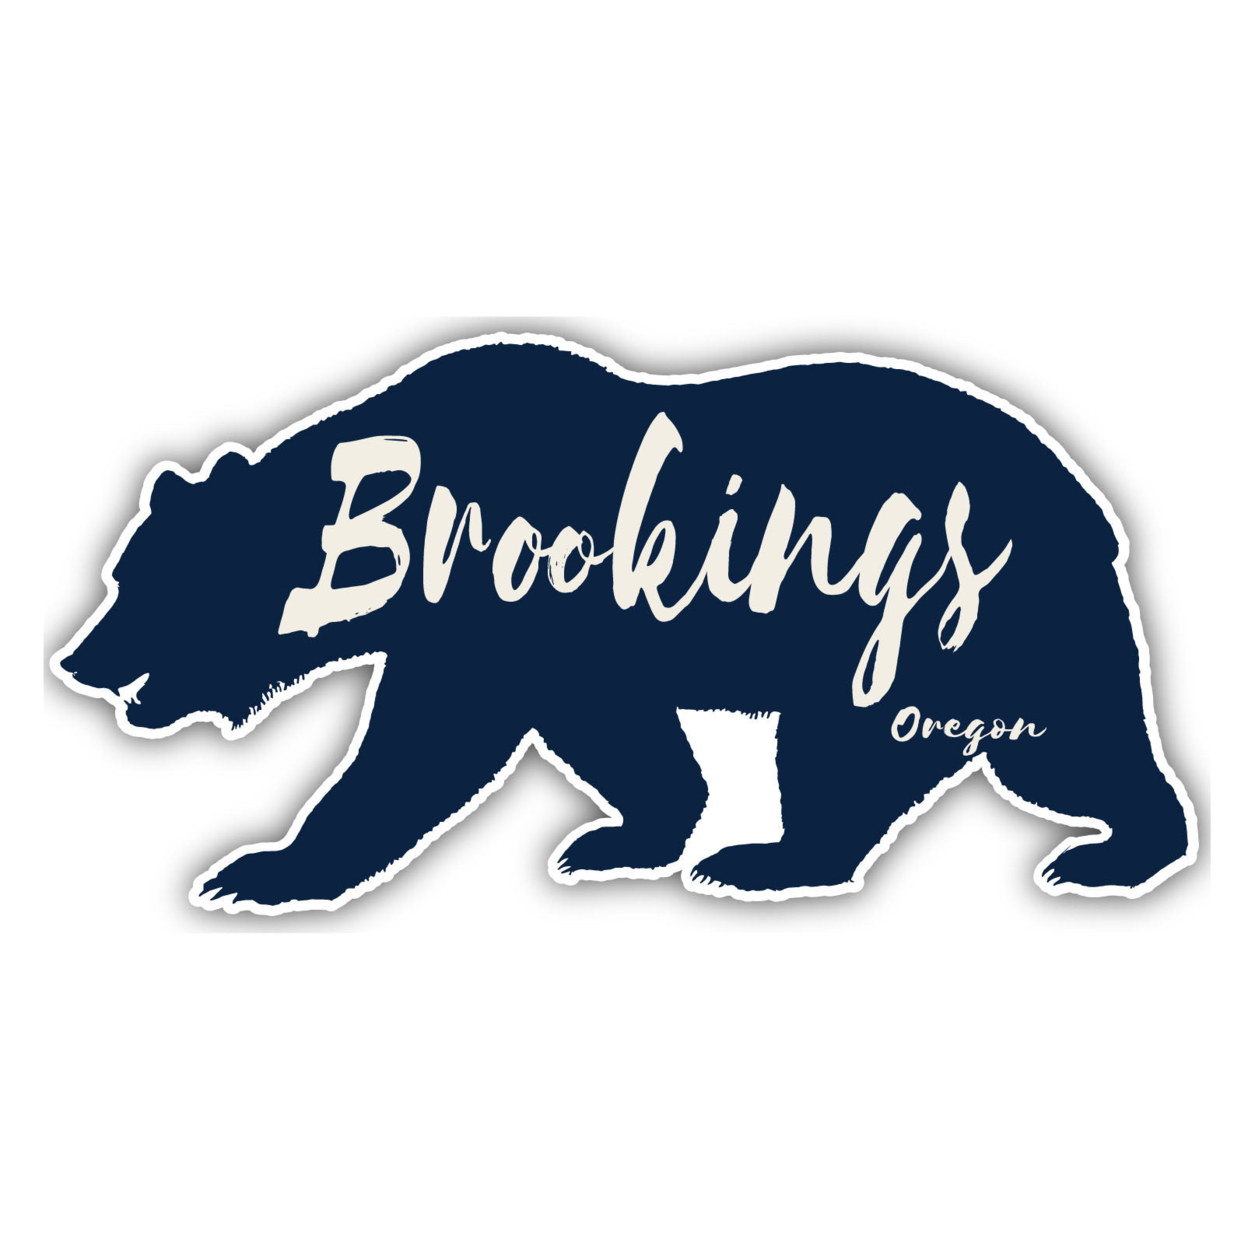 Brookings Oregon Souvenir Decorative Stickers (Choose Theme And Size) - Single Unit, 8-Inch, Camp Life